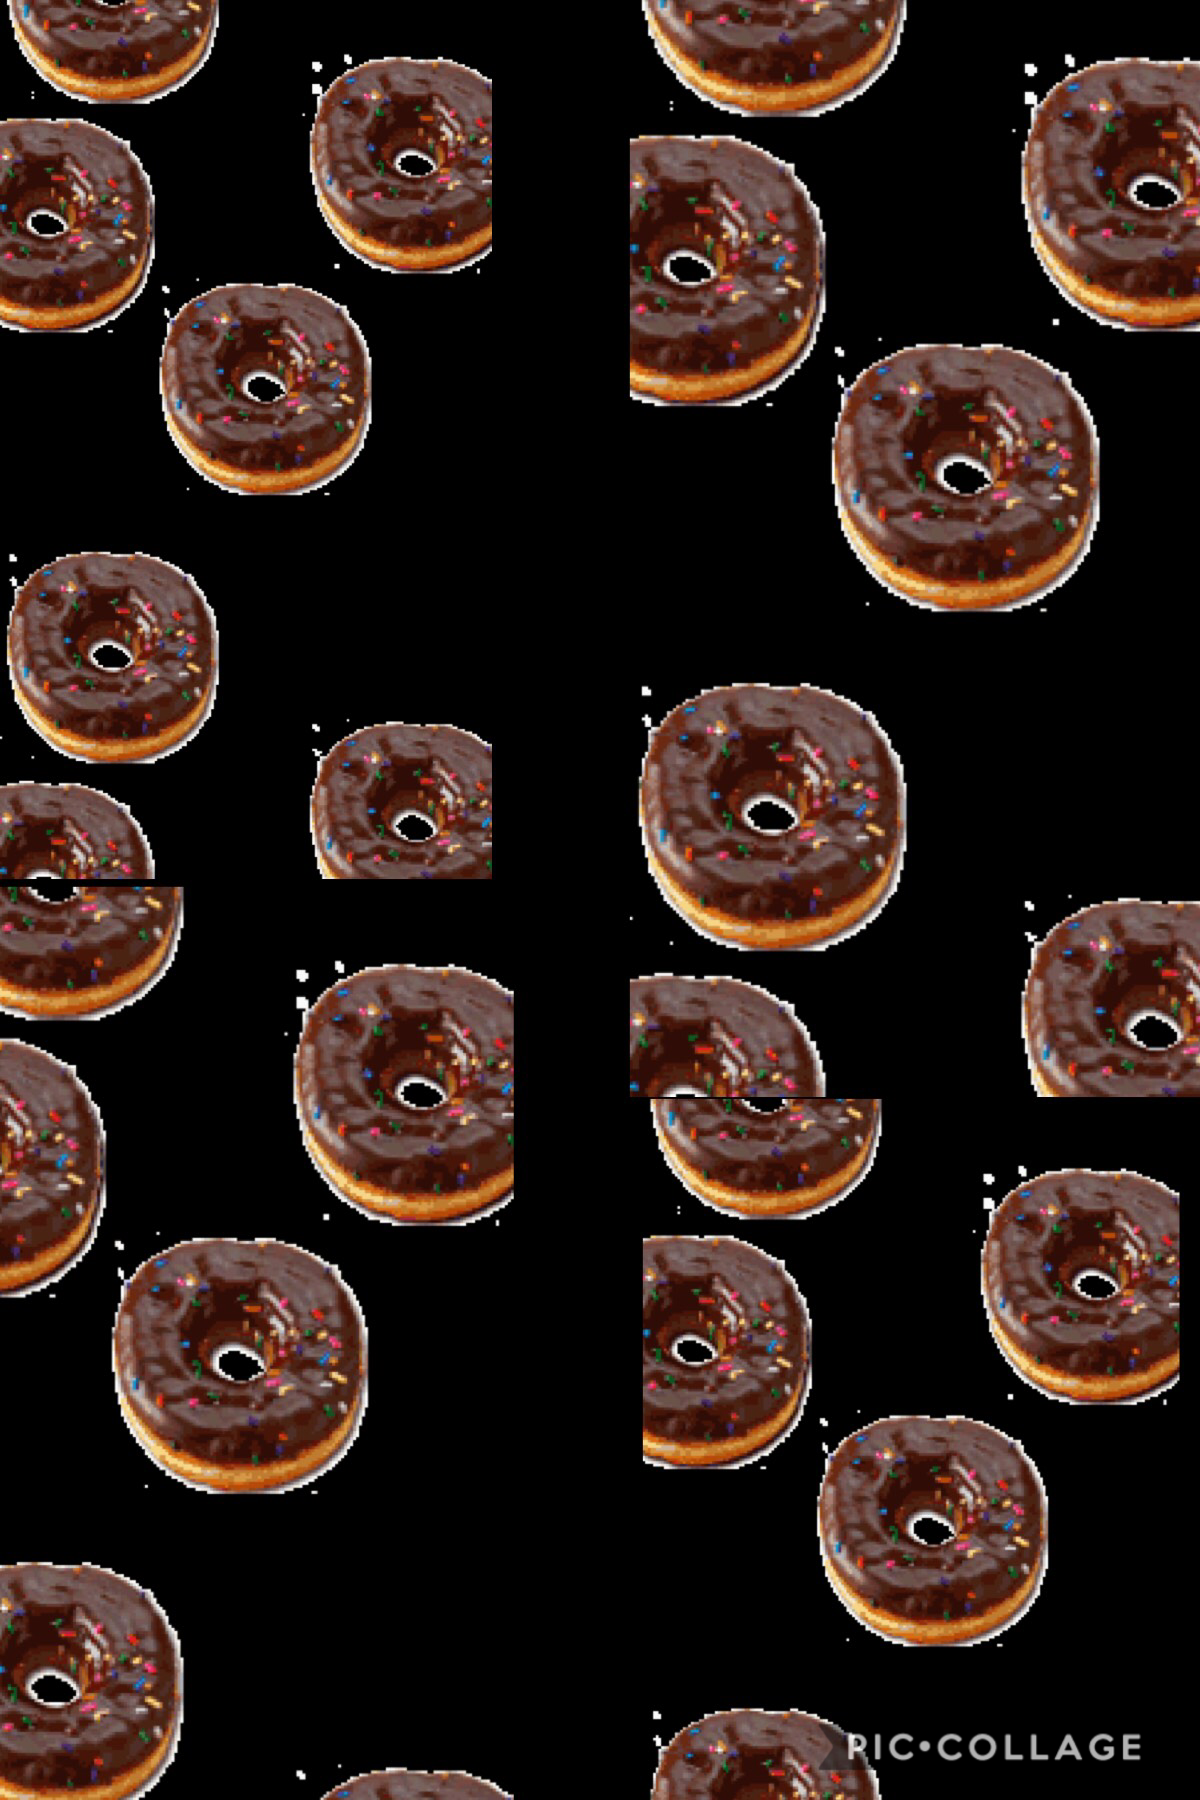 It's raining donuts 